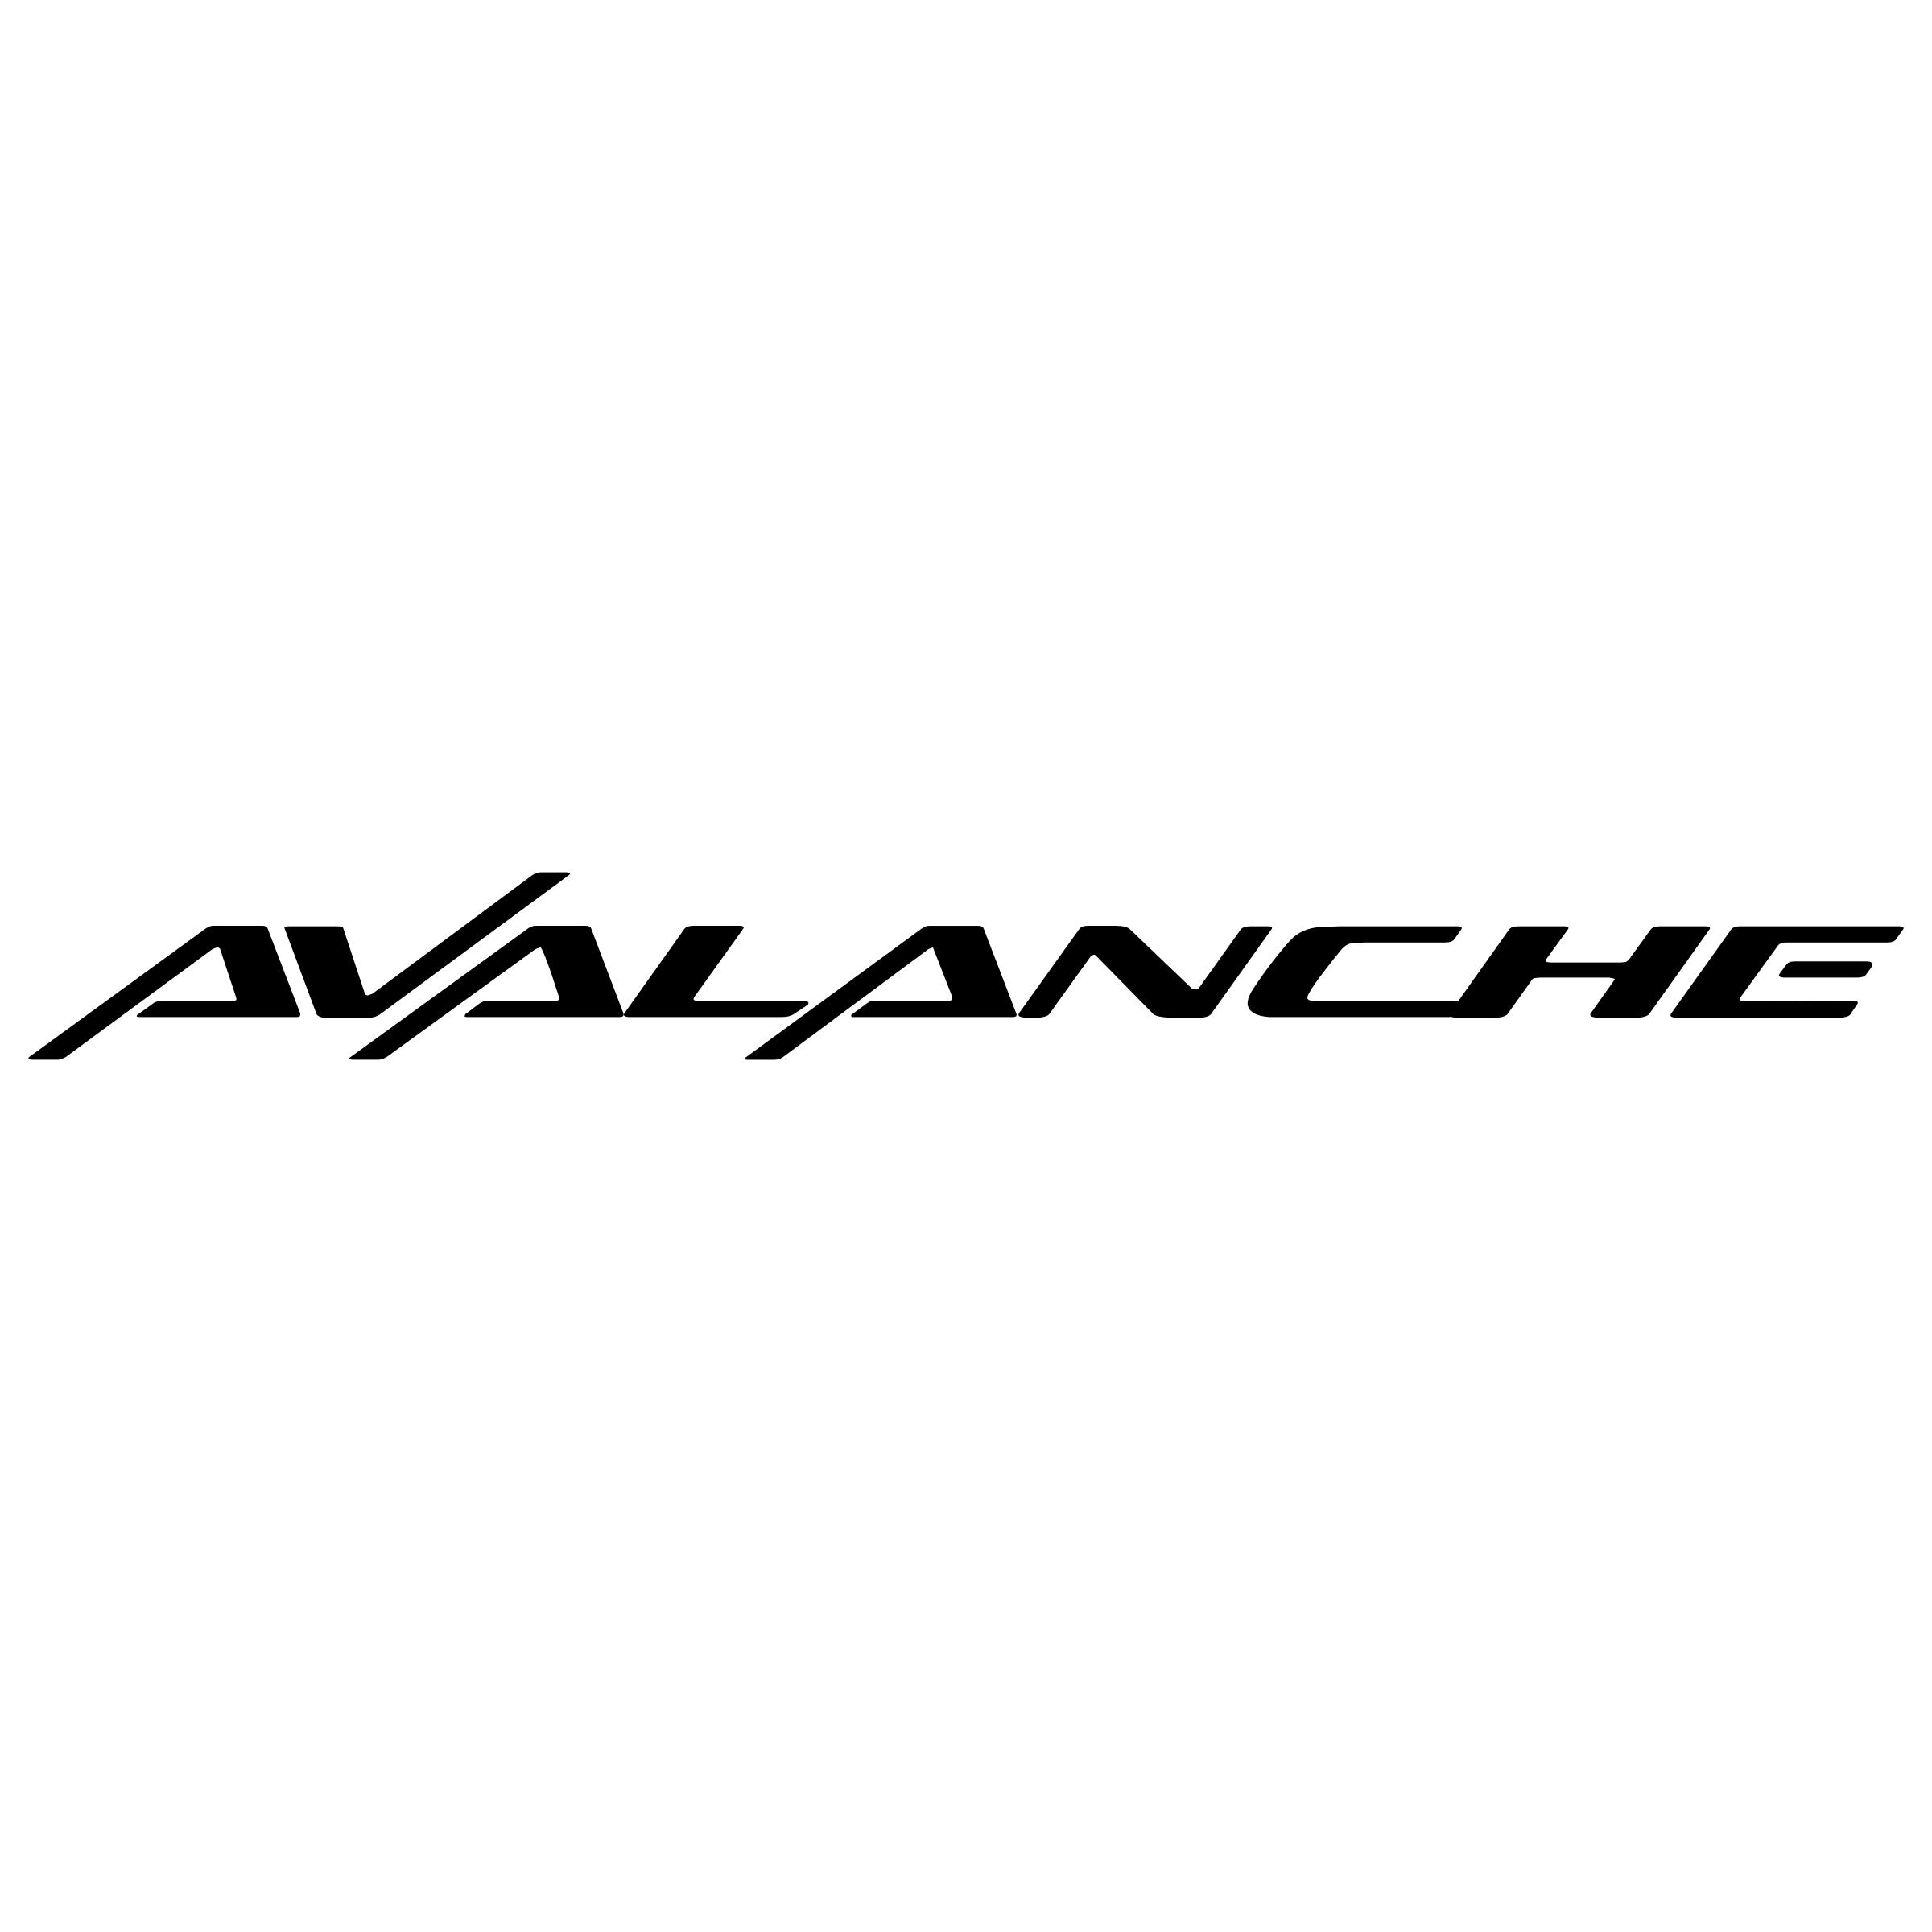 Avalanche Logo - Avalanche Logo PNG Transparent & SVG Vector